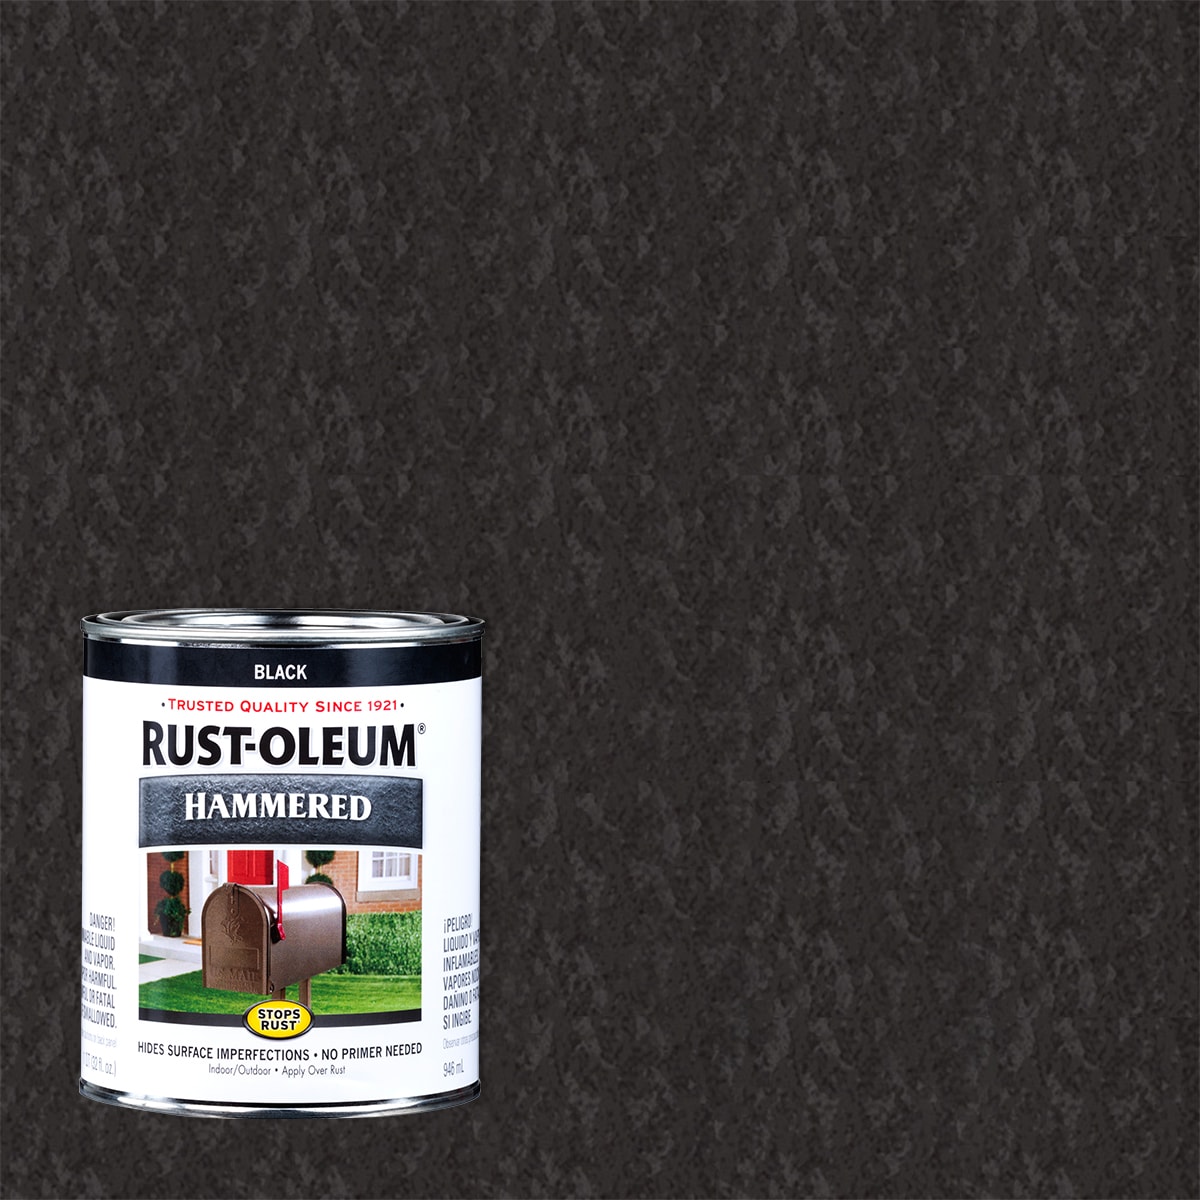 Rust-Oleum Stops Rust 1 Qt. Flat Black Protective Enamel Paint